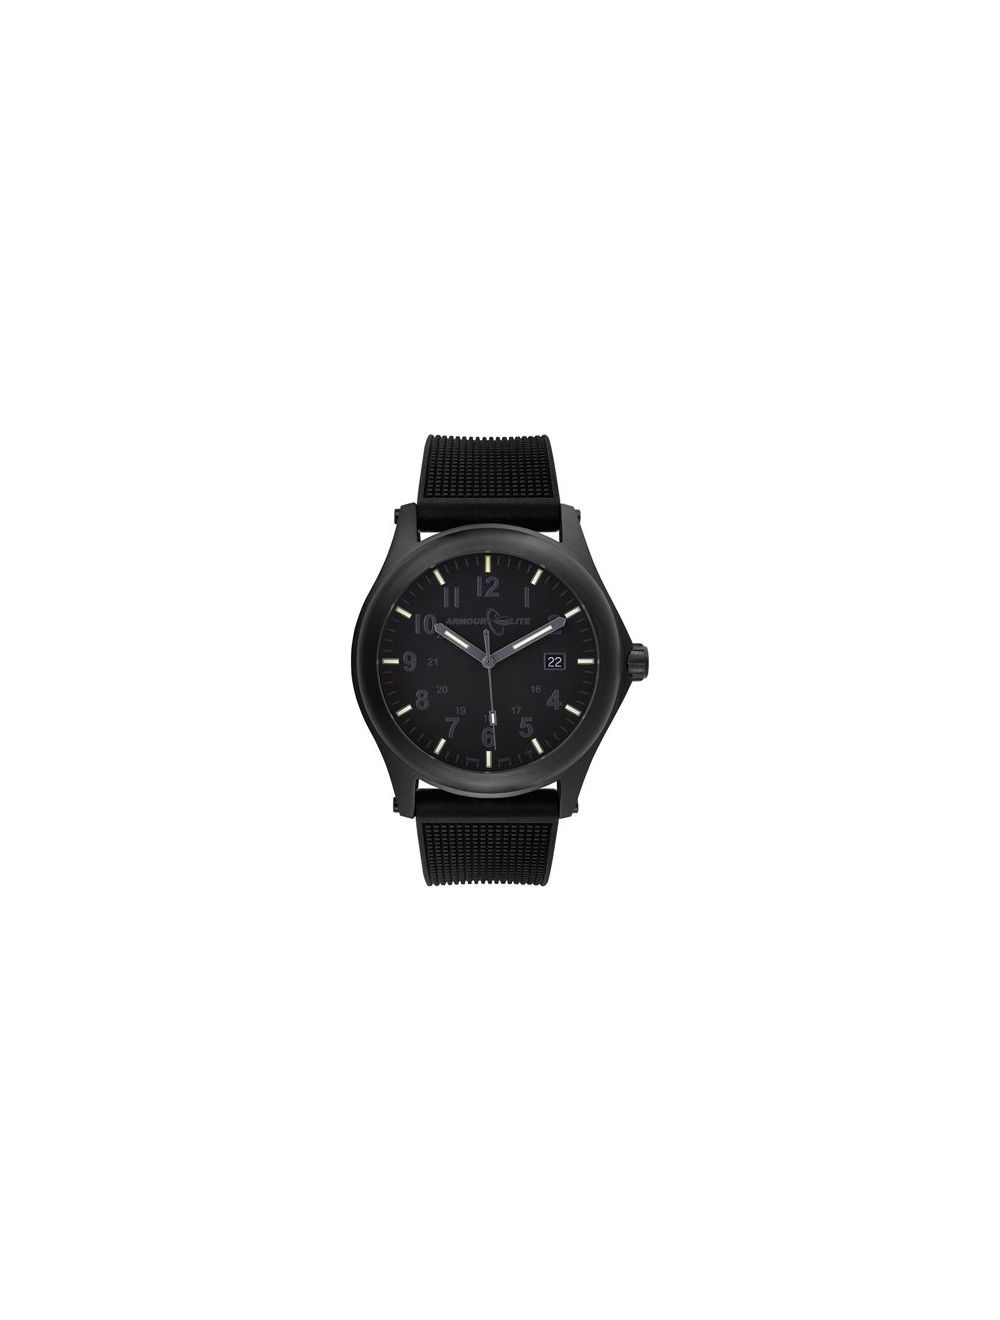 ArmourLite Stealth Black Swiss Tritium Illuminated Watch - Clothing & Accessories